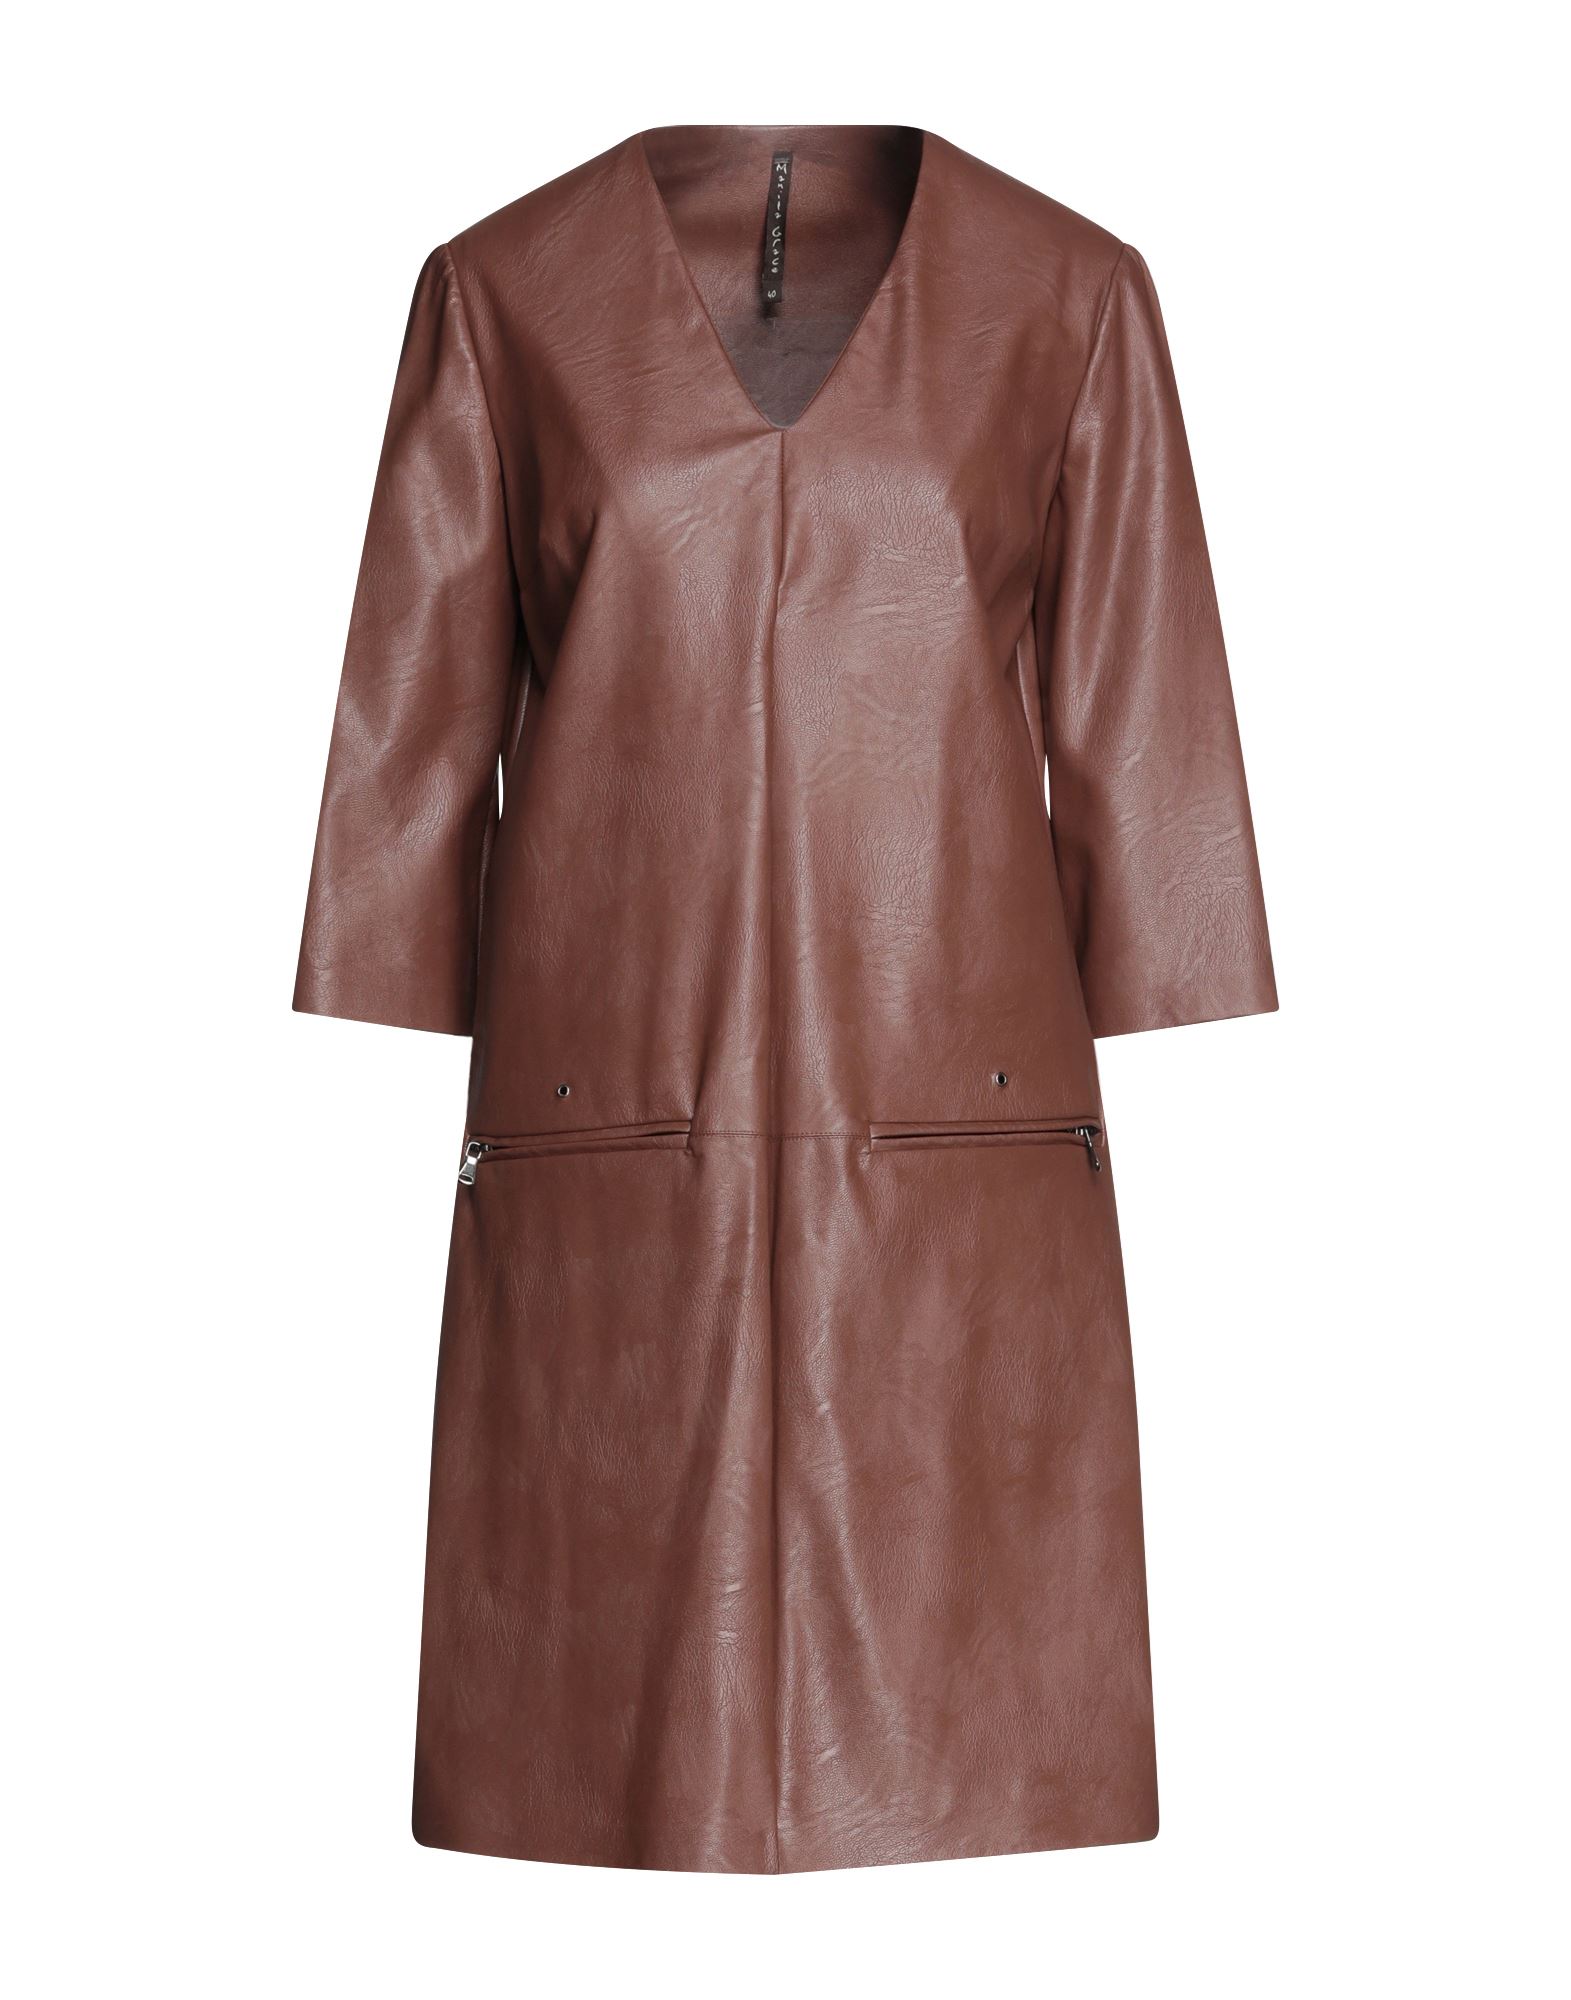 Manila Grace Short Dresses In Brown